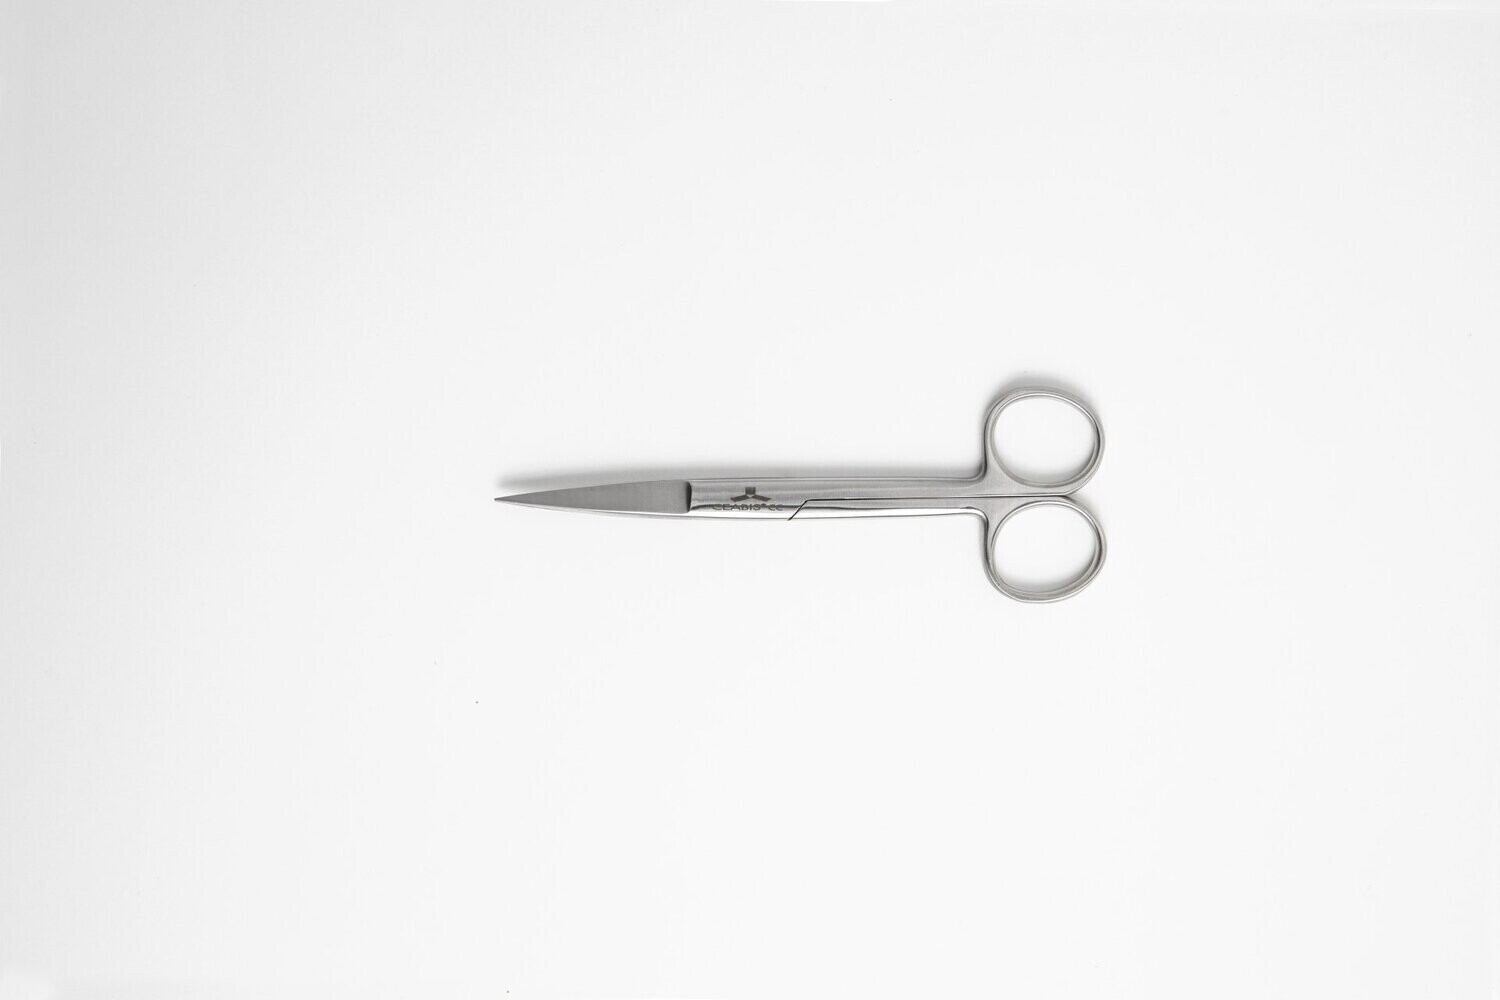 Straight/straight point scissors